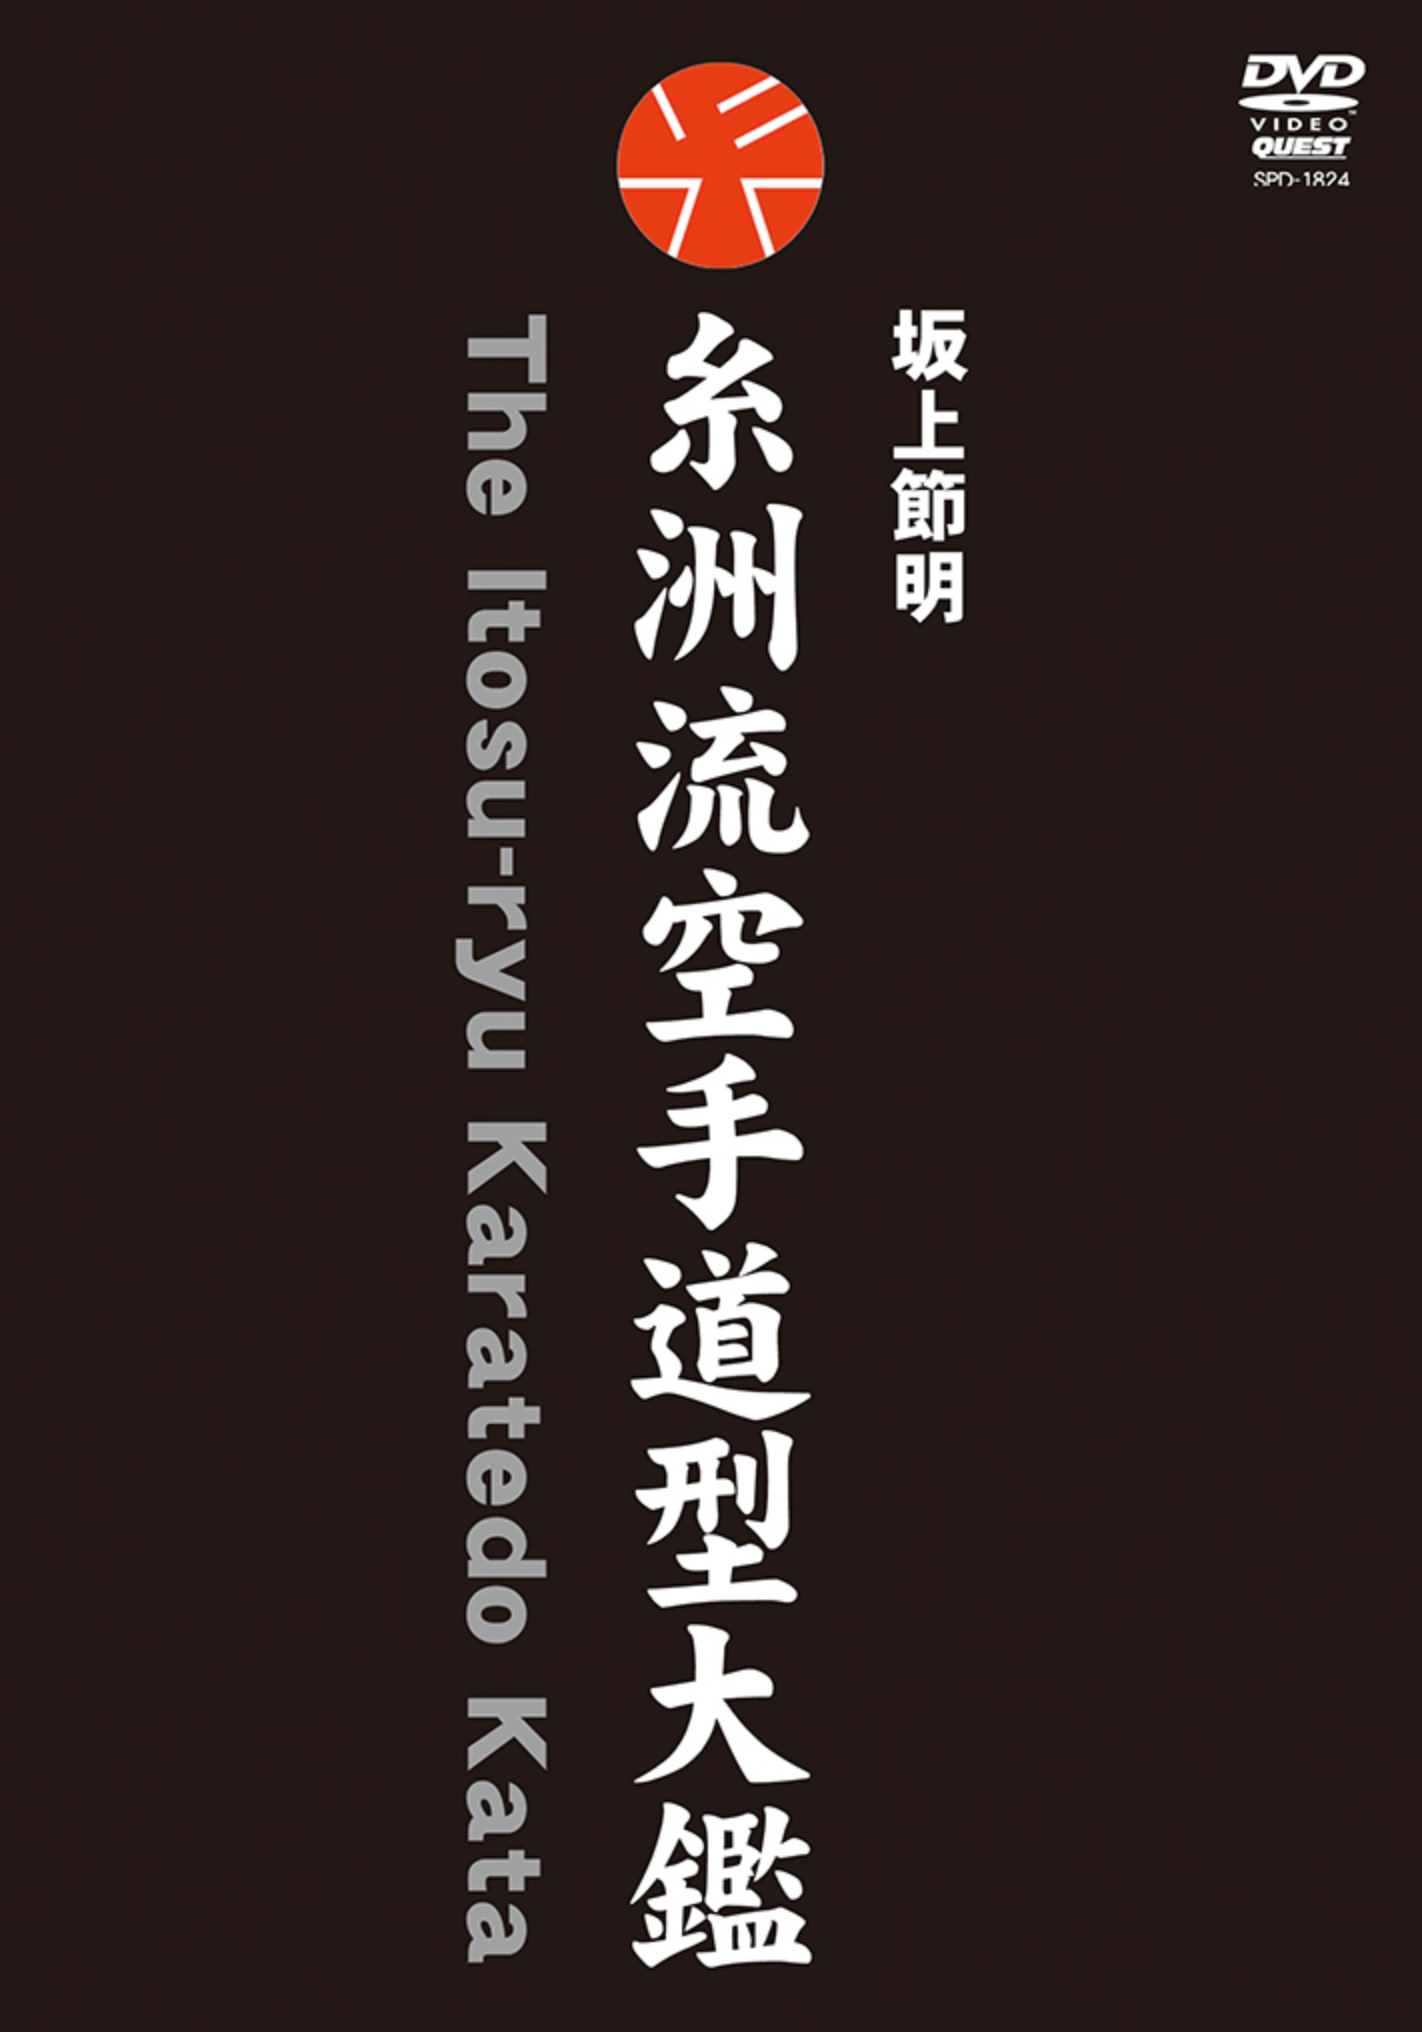 Itosu Ryu Karate Instructional 5 DVD Set by Sadaaki Sakagami - Budovideos Inc